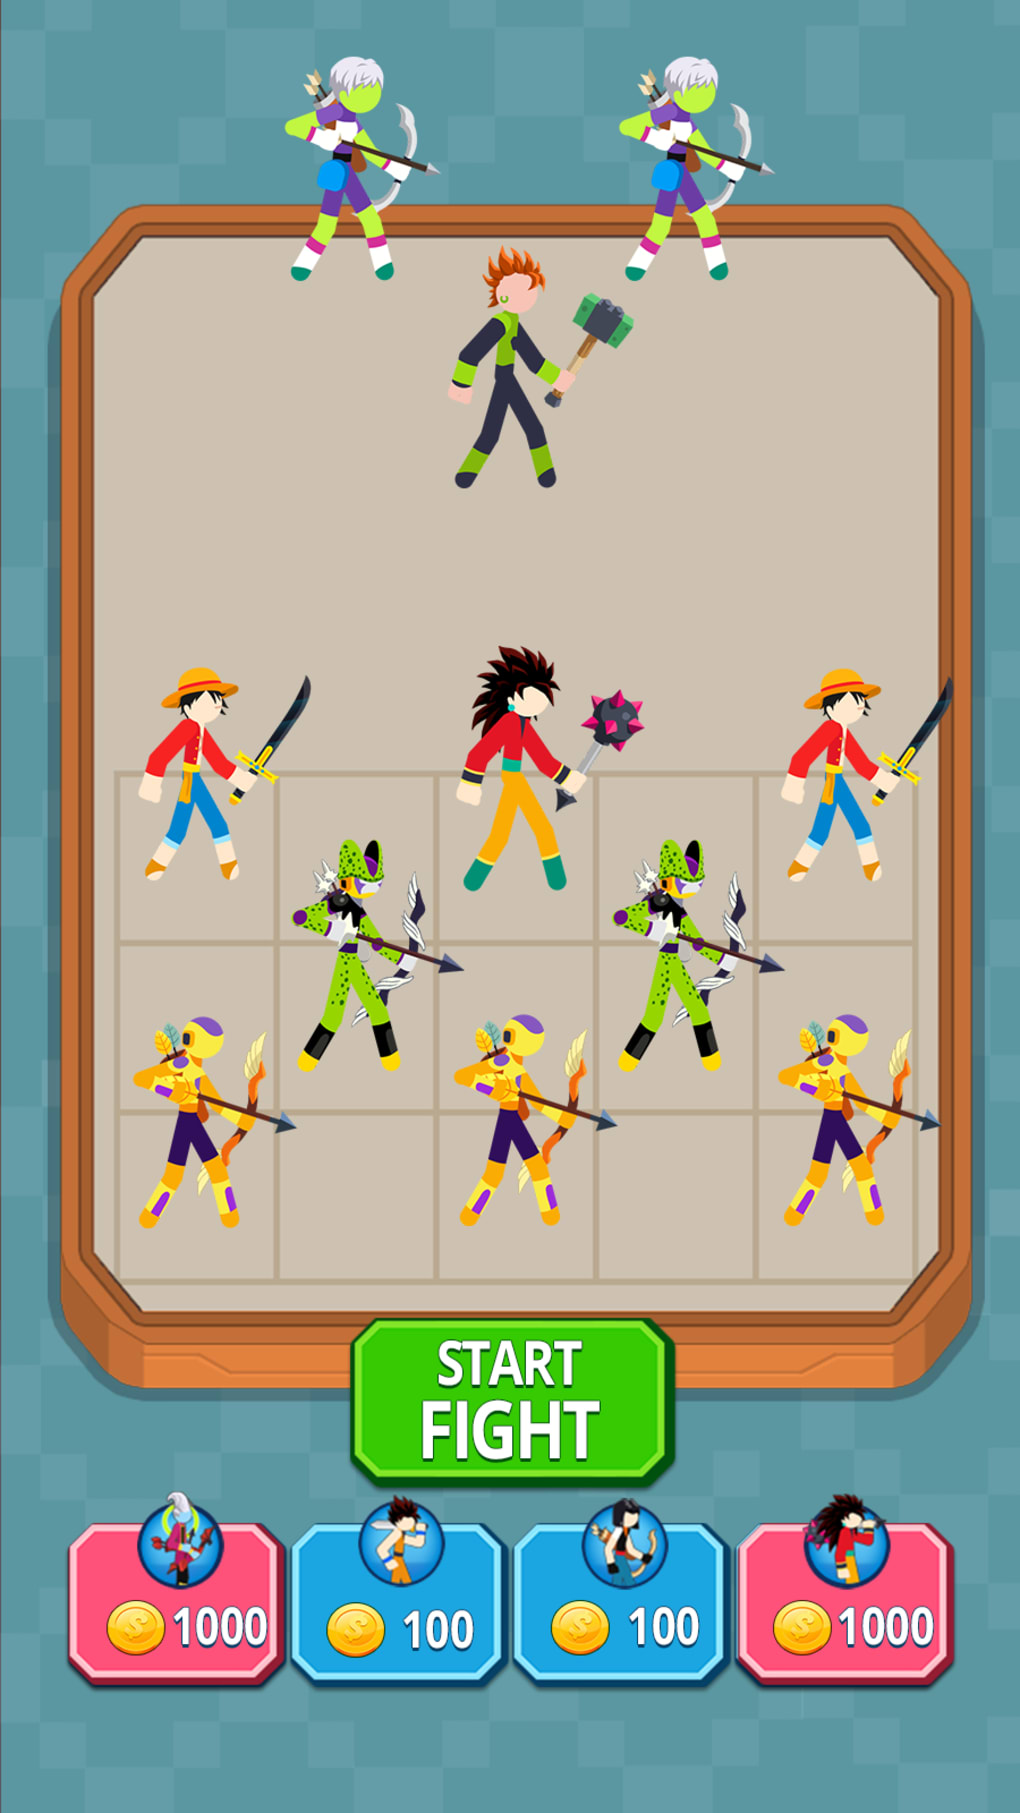 Stickman Warriors - Apps on Google Play